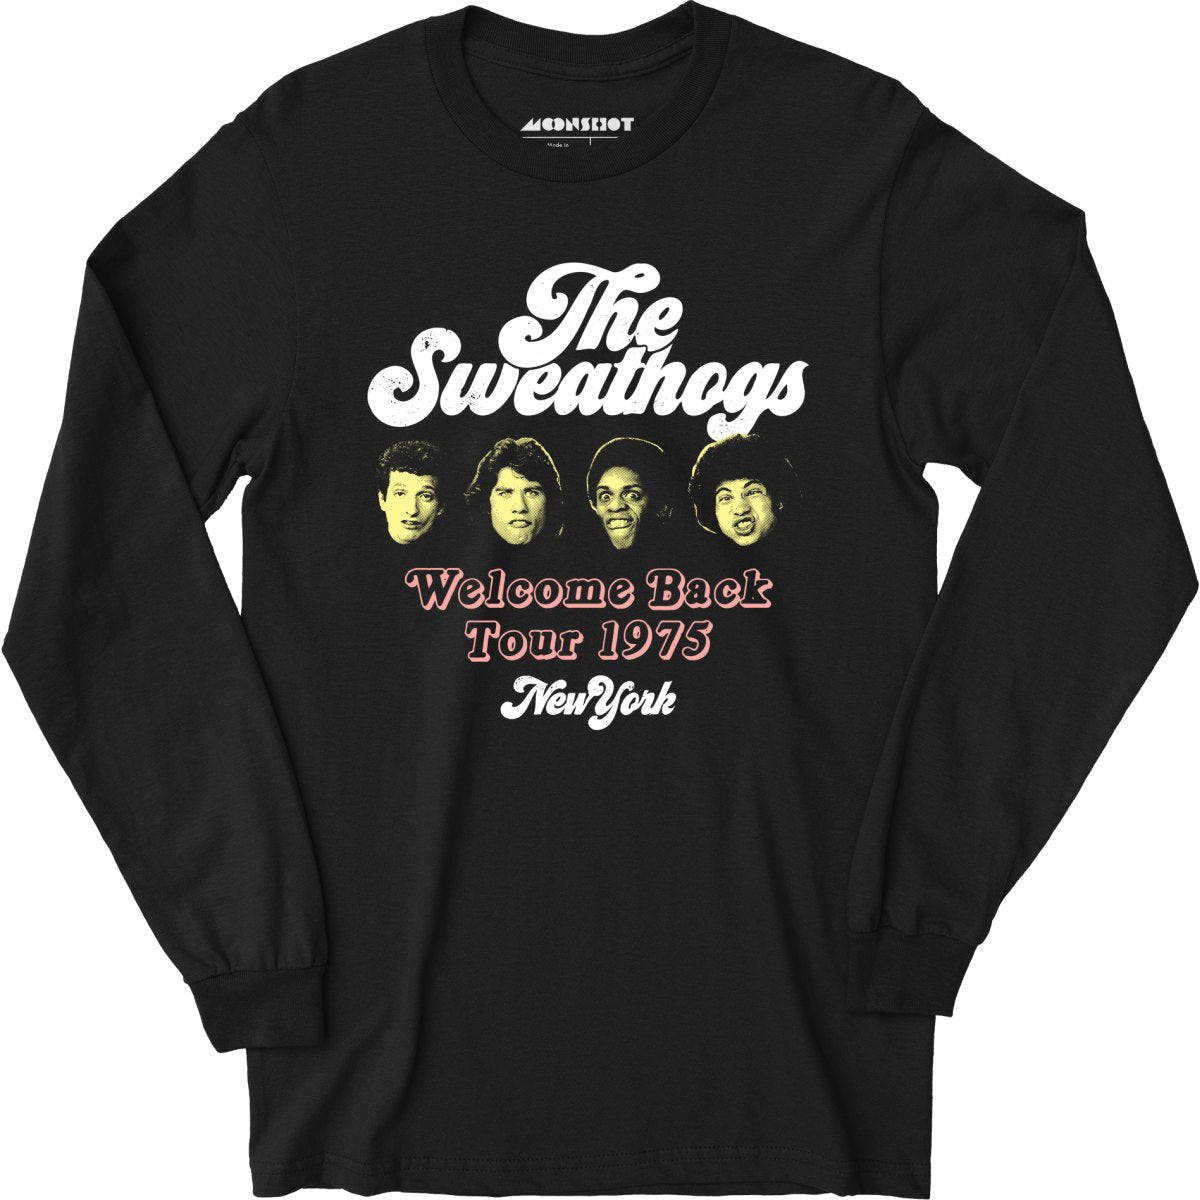 The Sweathogs - Long Sleeve T-Shirt